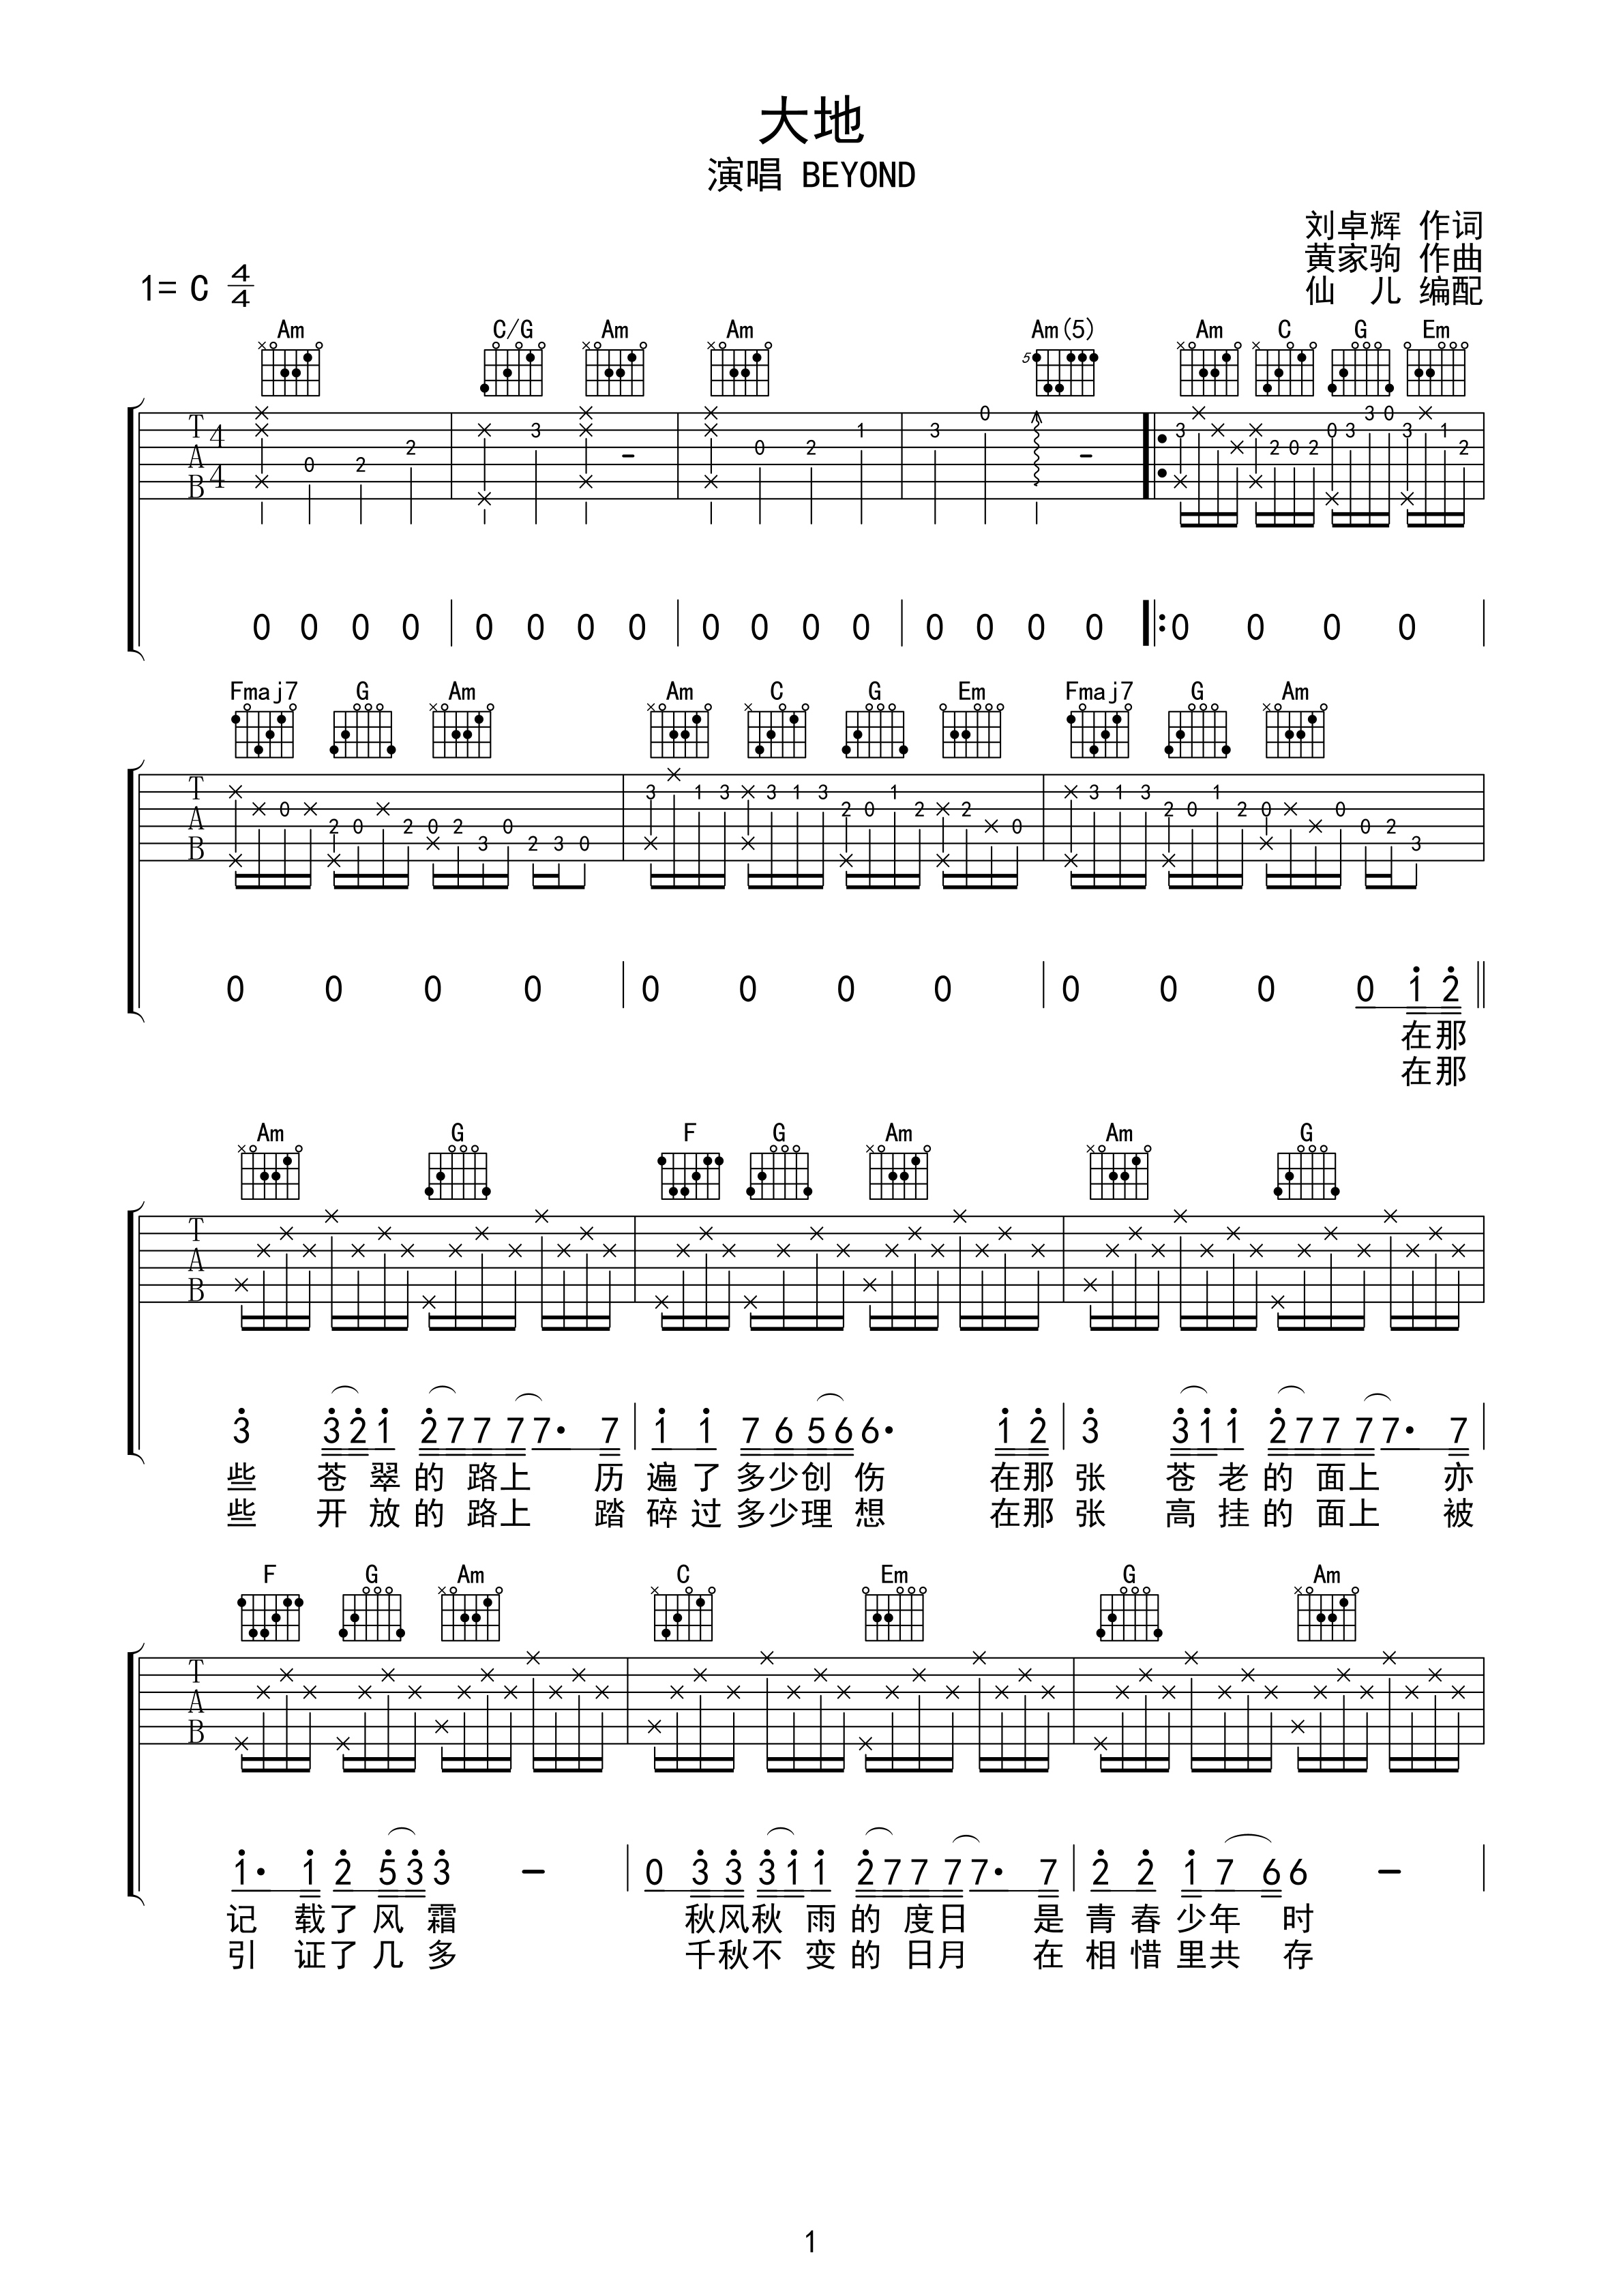 Beyond吉他谱【大地】乐队总谱91版-吉他曲谱 - 乐器学习网